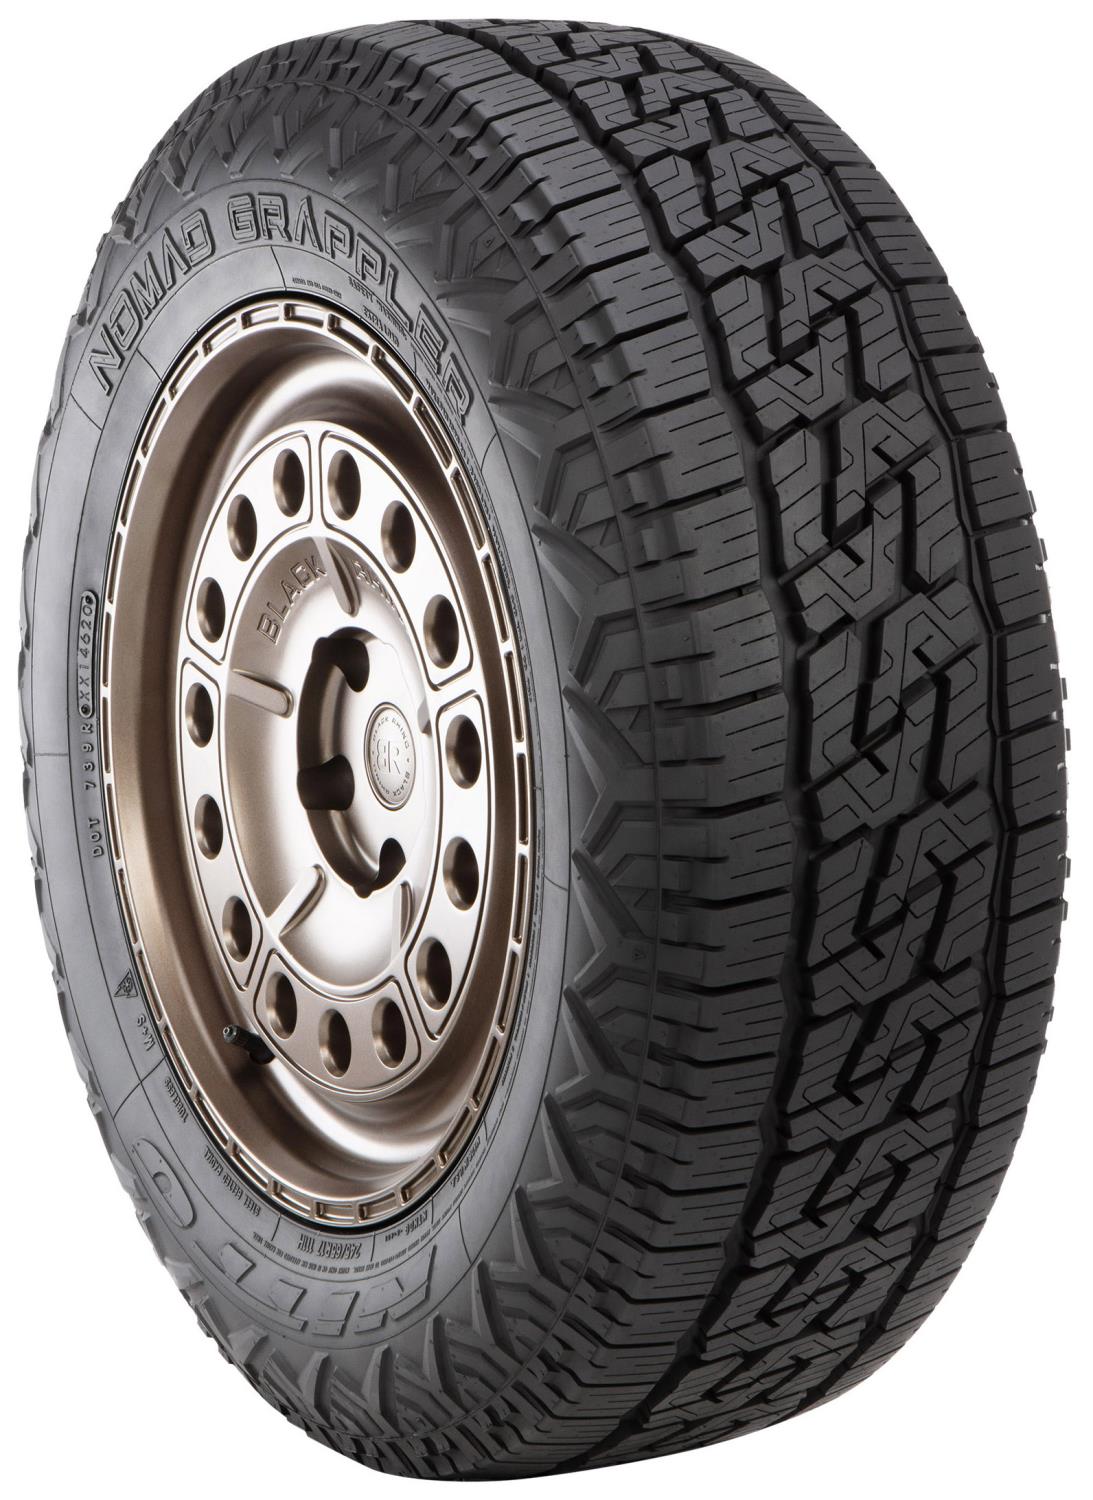 Nomad Grappler Crossover-Terrain Tire 275/45R20